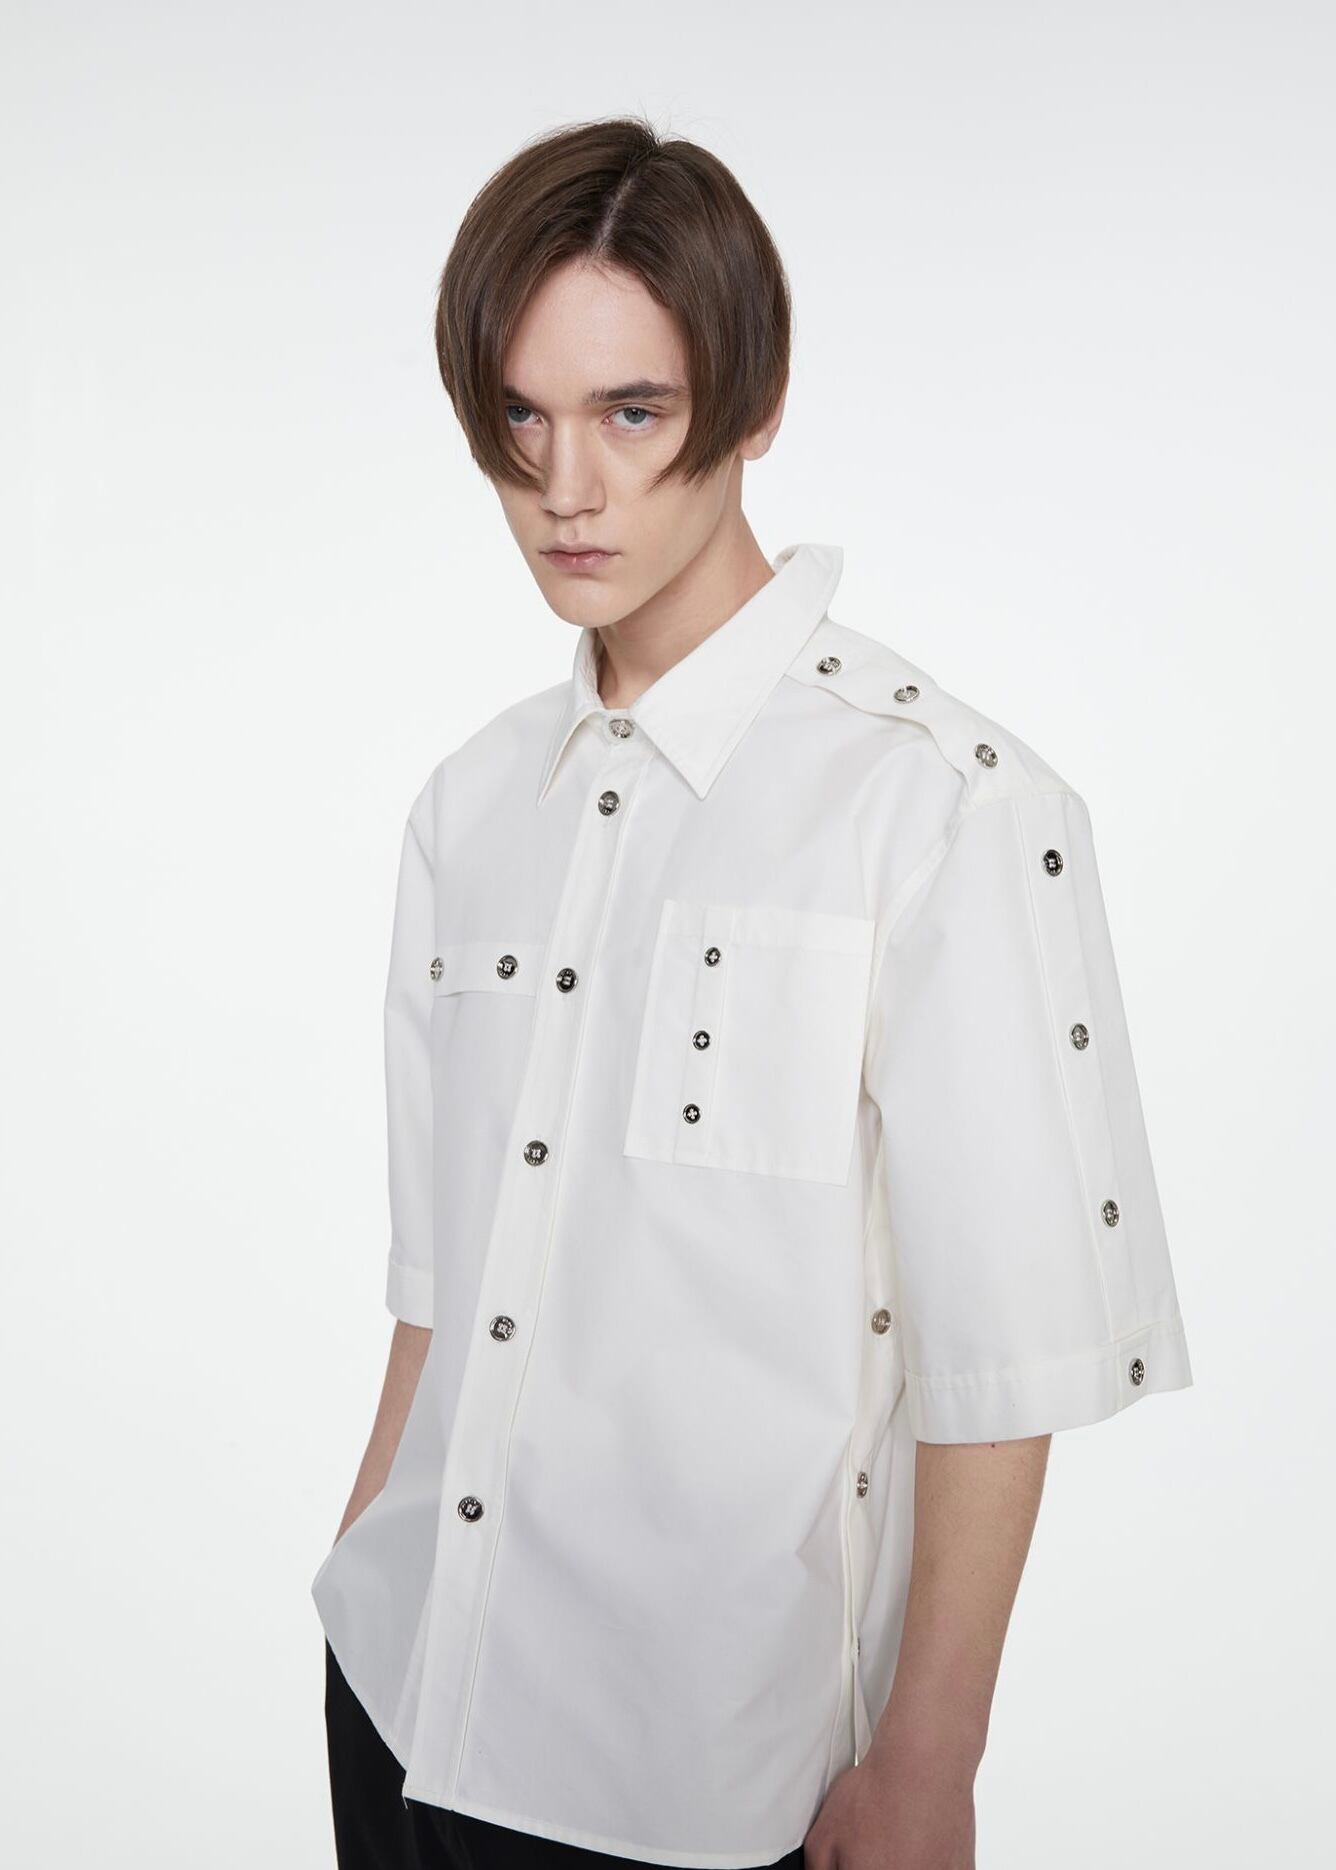 WHITE】シルバーメタルボタンシャツ | A CHINL1A -MENS-